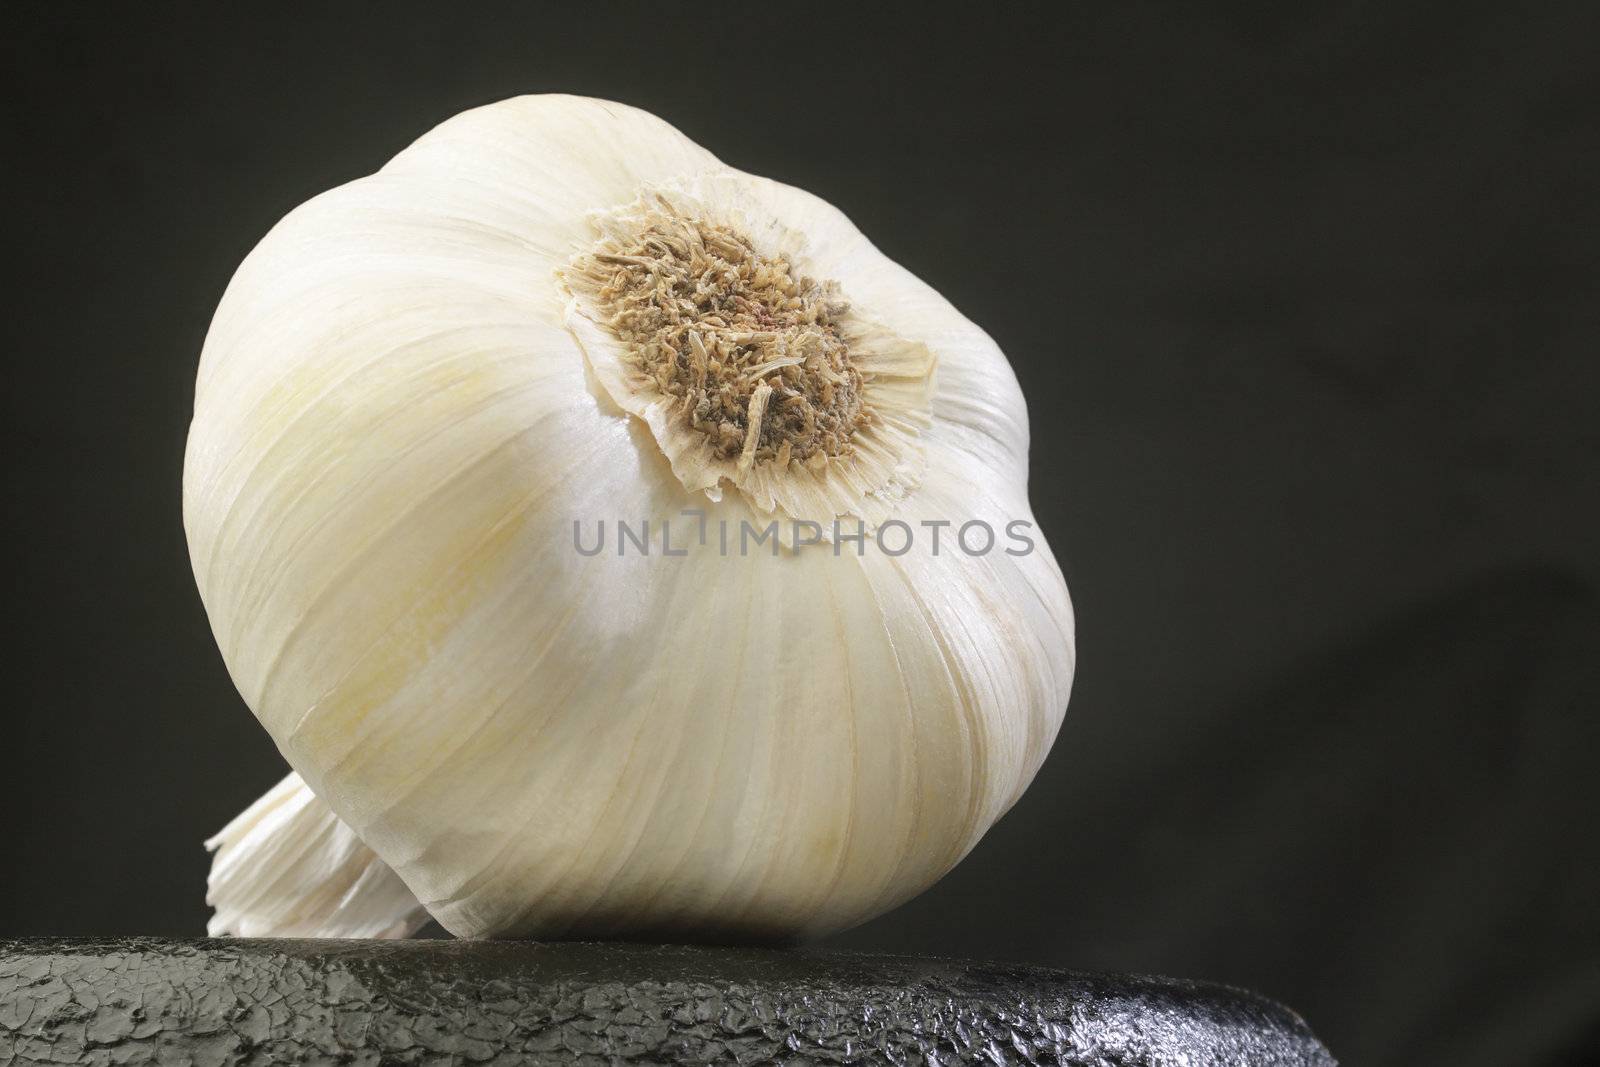 Whole head of garlic on black background.